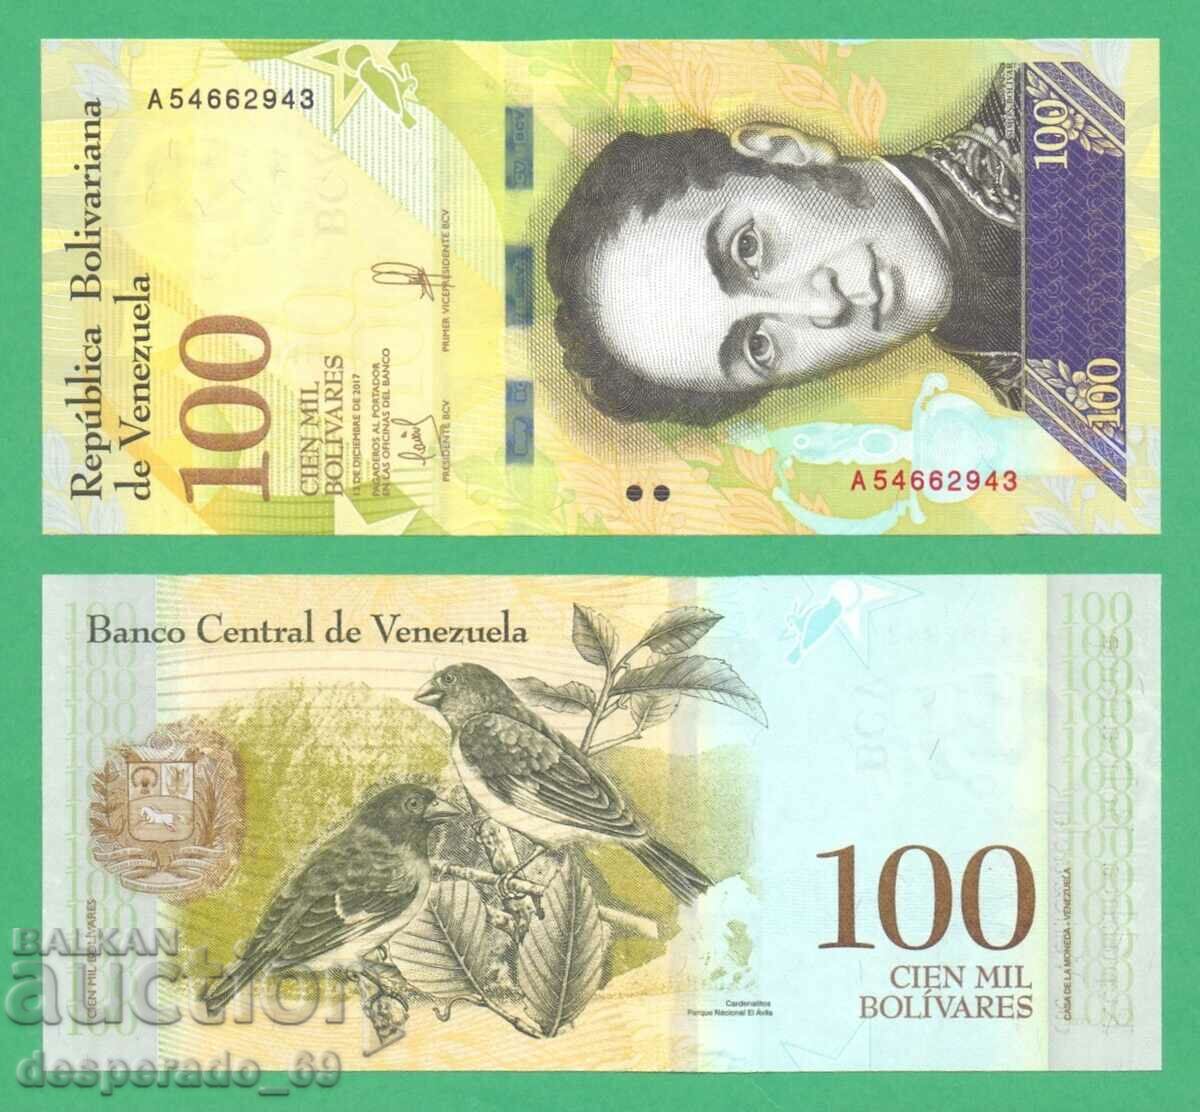 (¯`'•.¸ VENEZUELA 100.000 Bolivar 2017 UNC ¸.•'´¯)